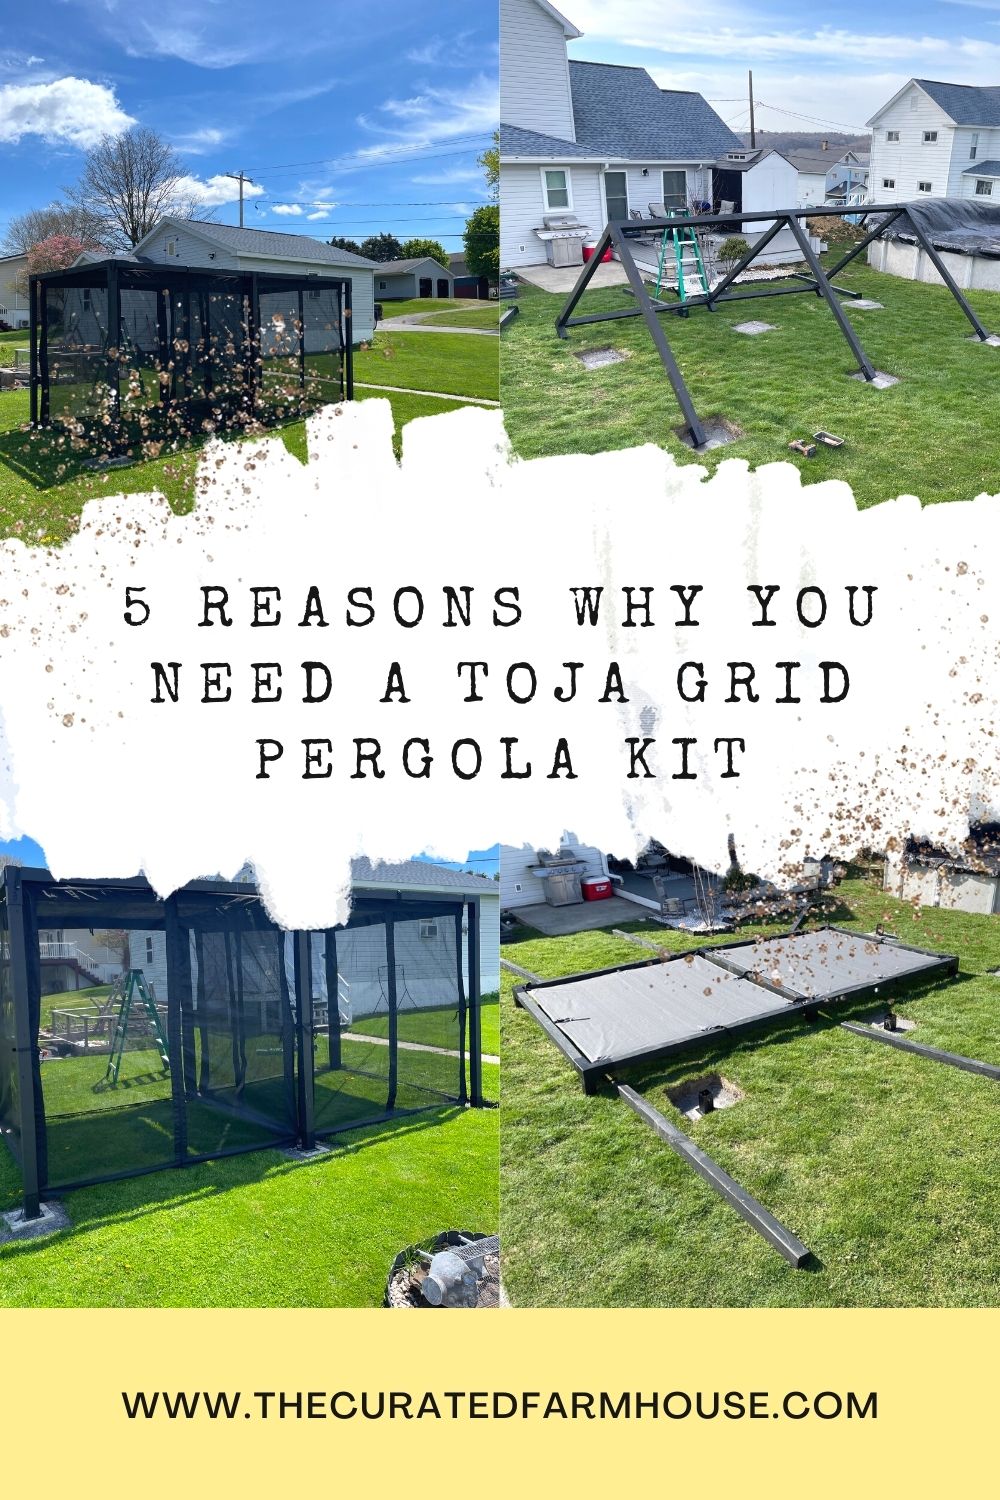 5 Reasons Why You Need A Toja Grid Pergola Kit